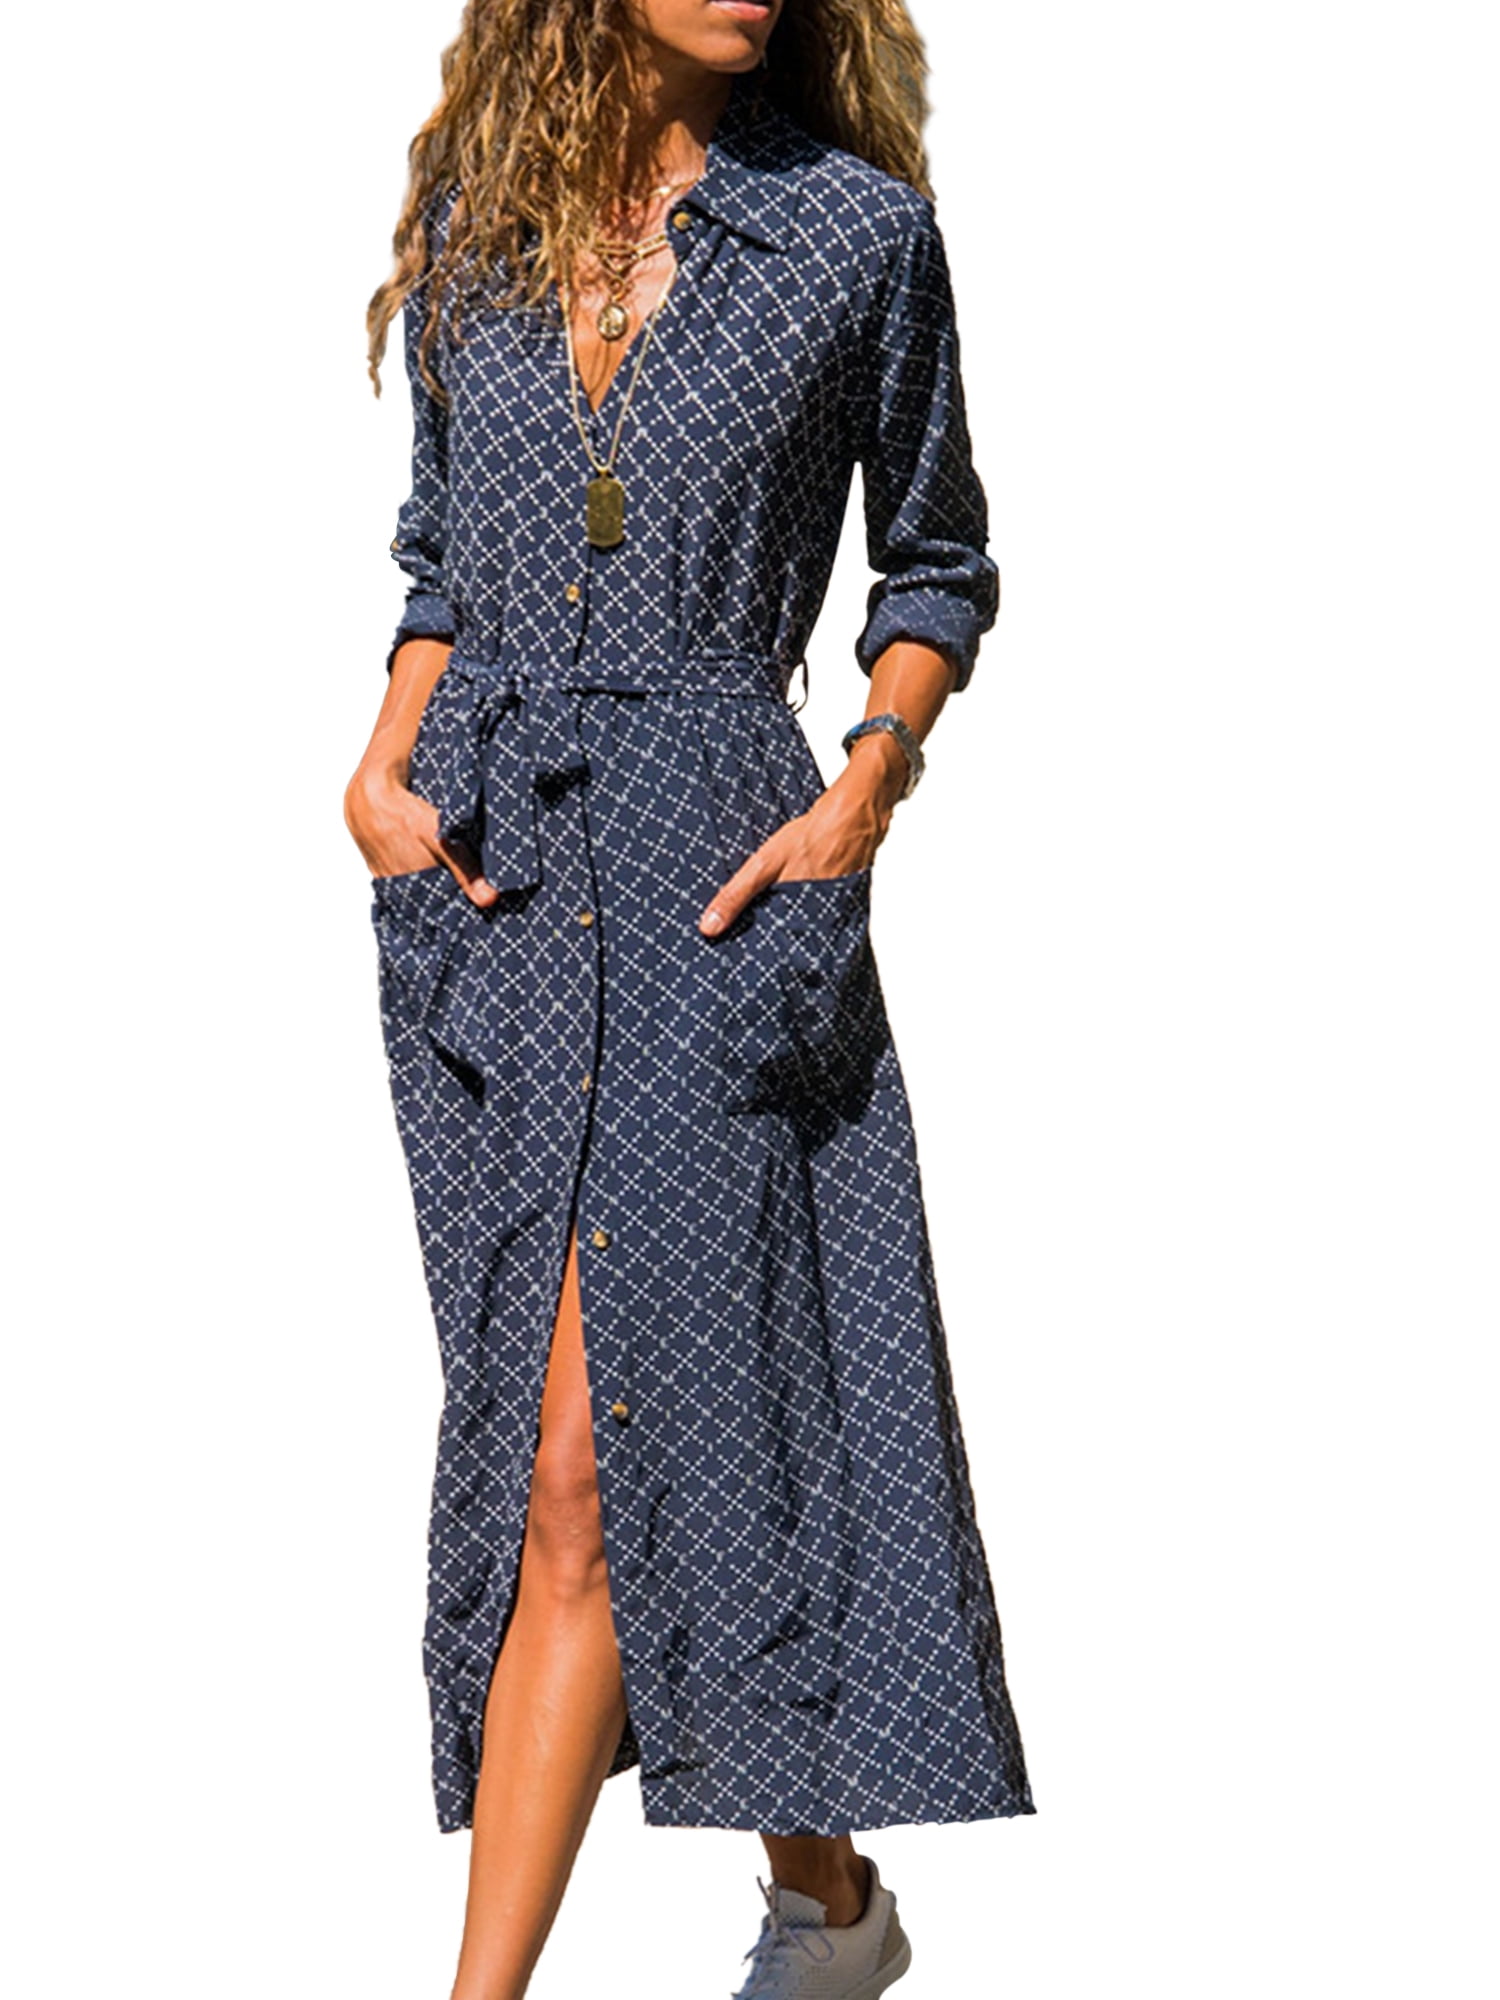 Womens Casual Sleeveless Striped Dress V Neck Button Down Pocket Loose Shirt Midi Dress with Belt Maxi Dresses Tops Dresses Sundress 